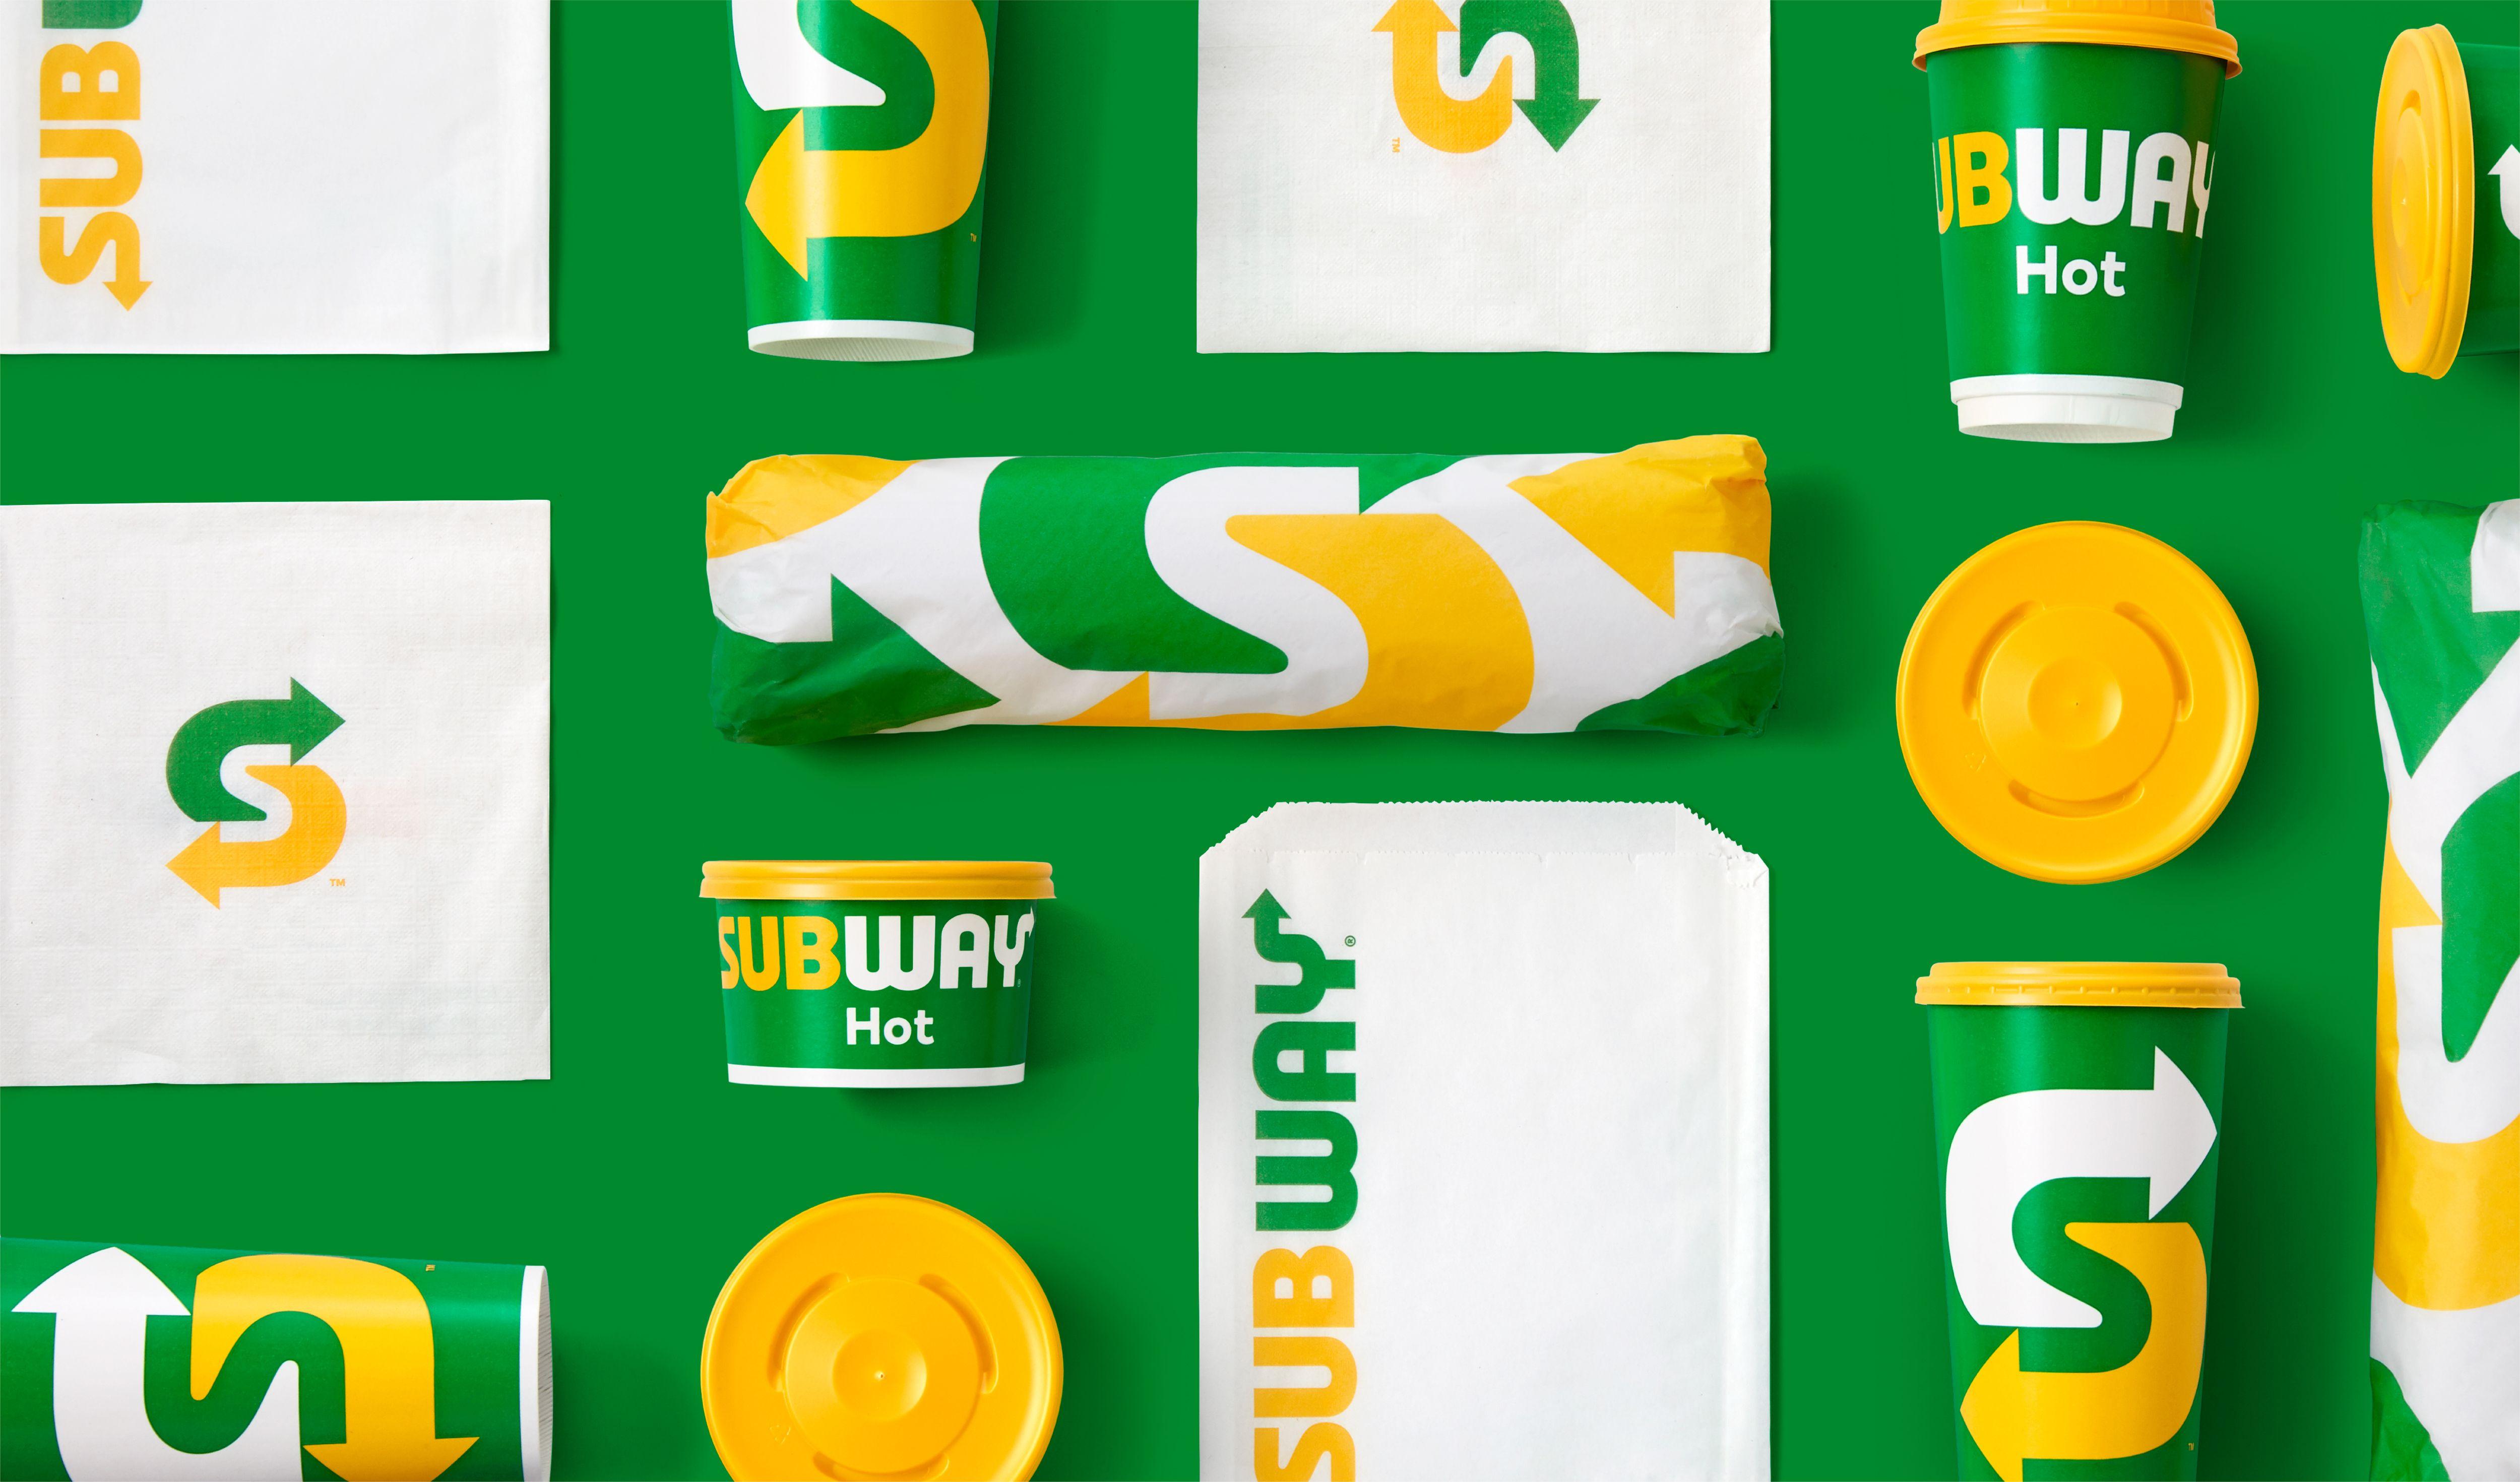 Subway 2018 Logo - The FAB Awards | Subway Visual Identity